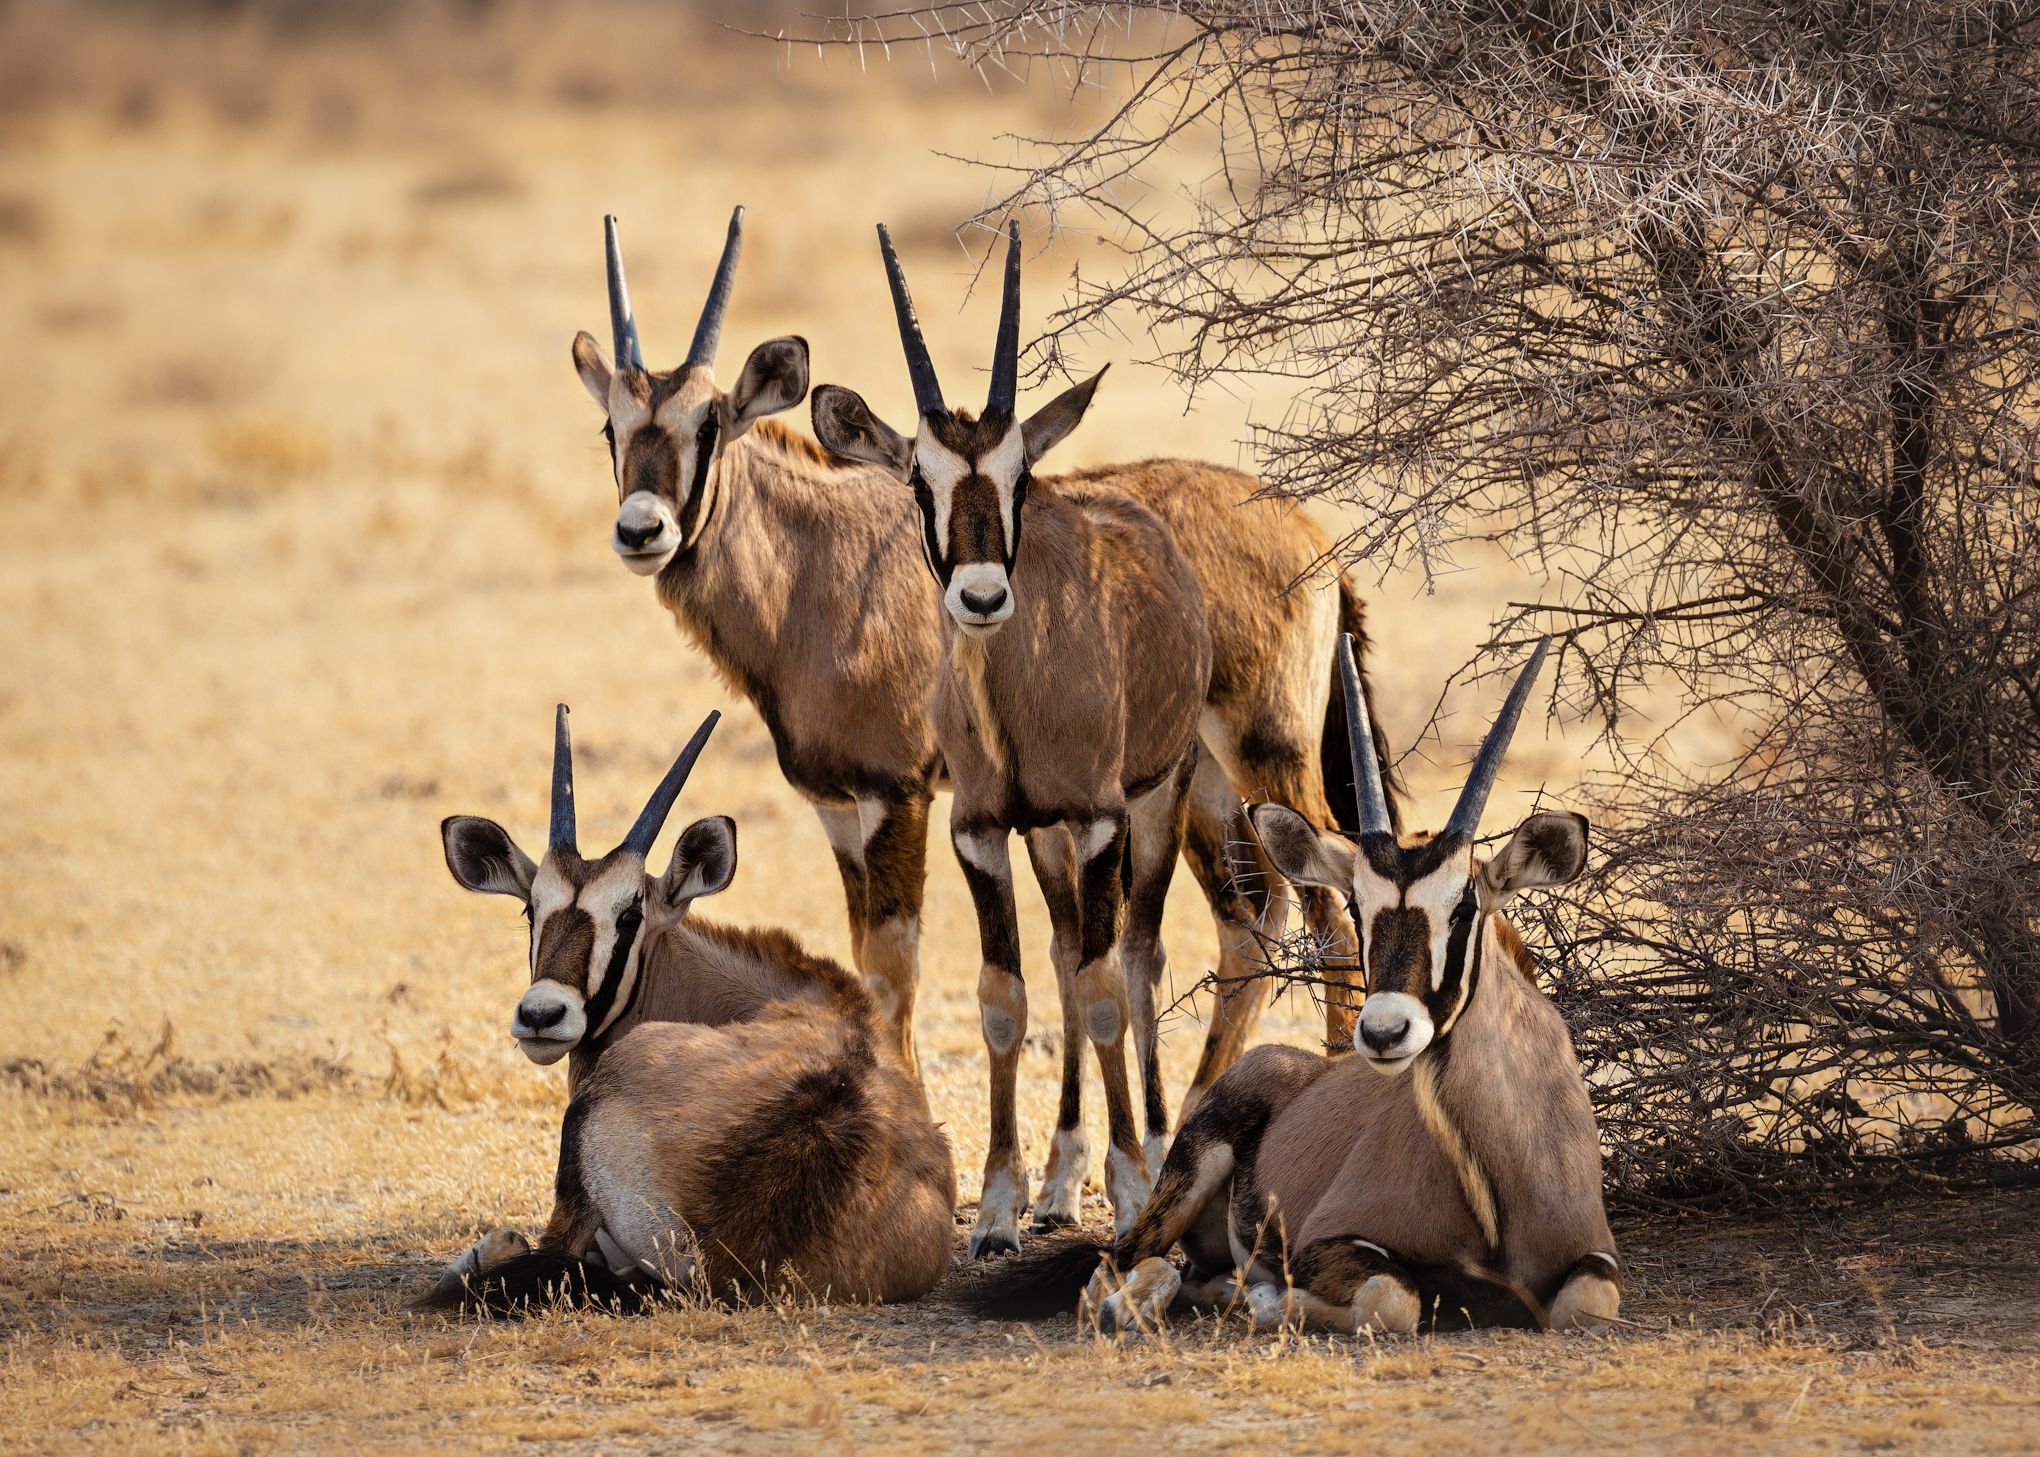 #Намибия #Этоша #Африка #сафари #животные #ориксы #africa #namibia #animals #safari #oriks, Наталия Деркач